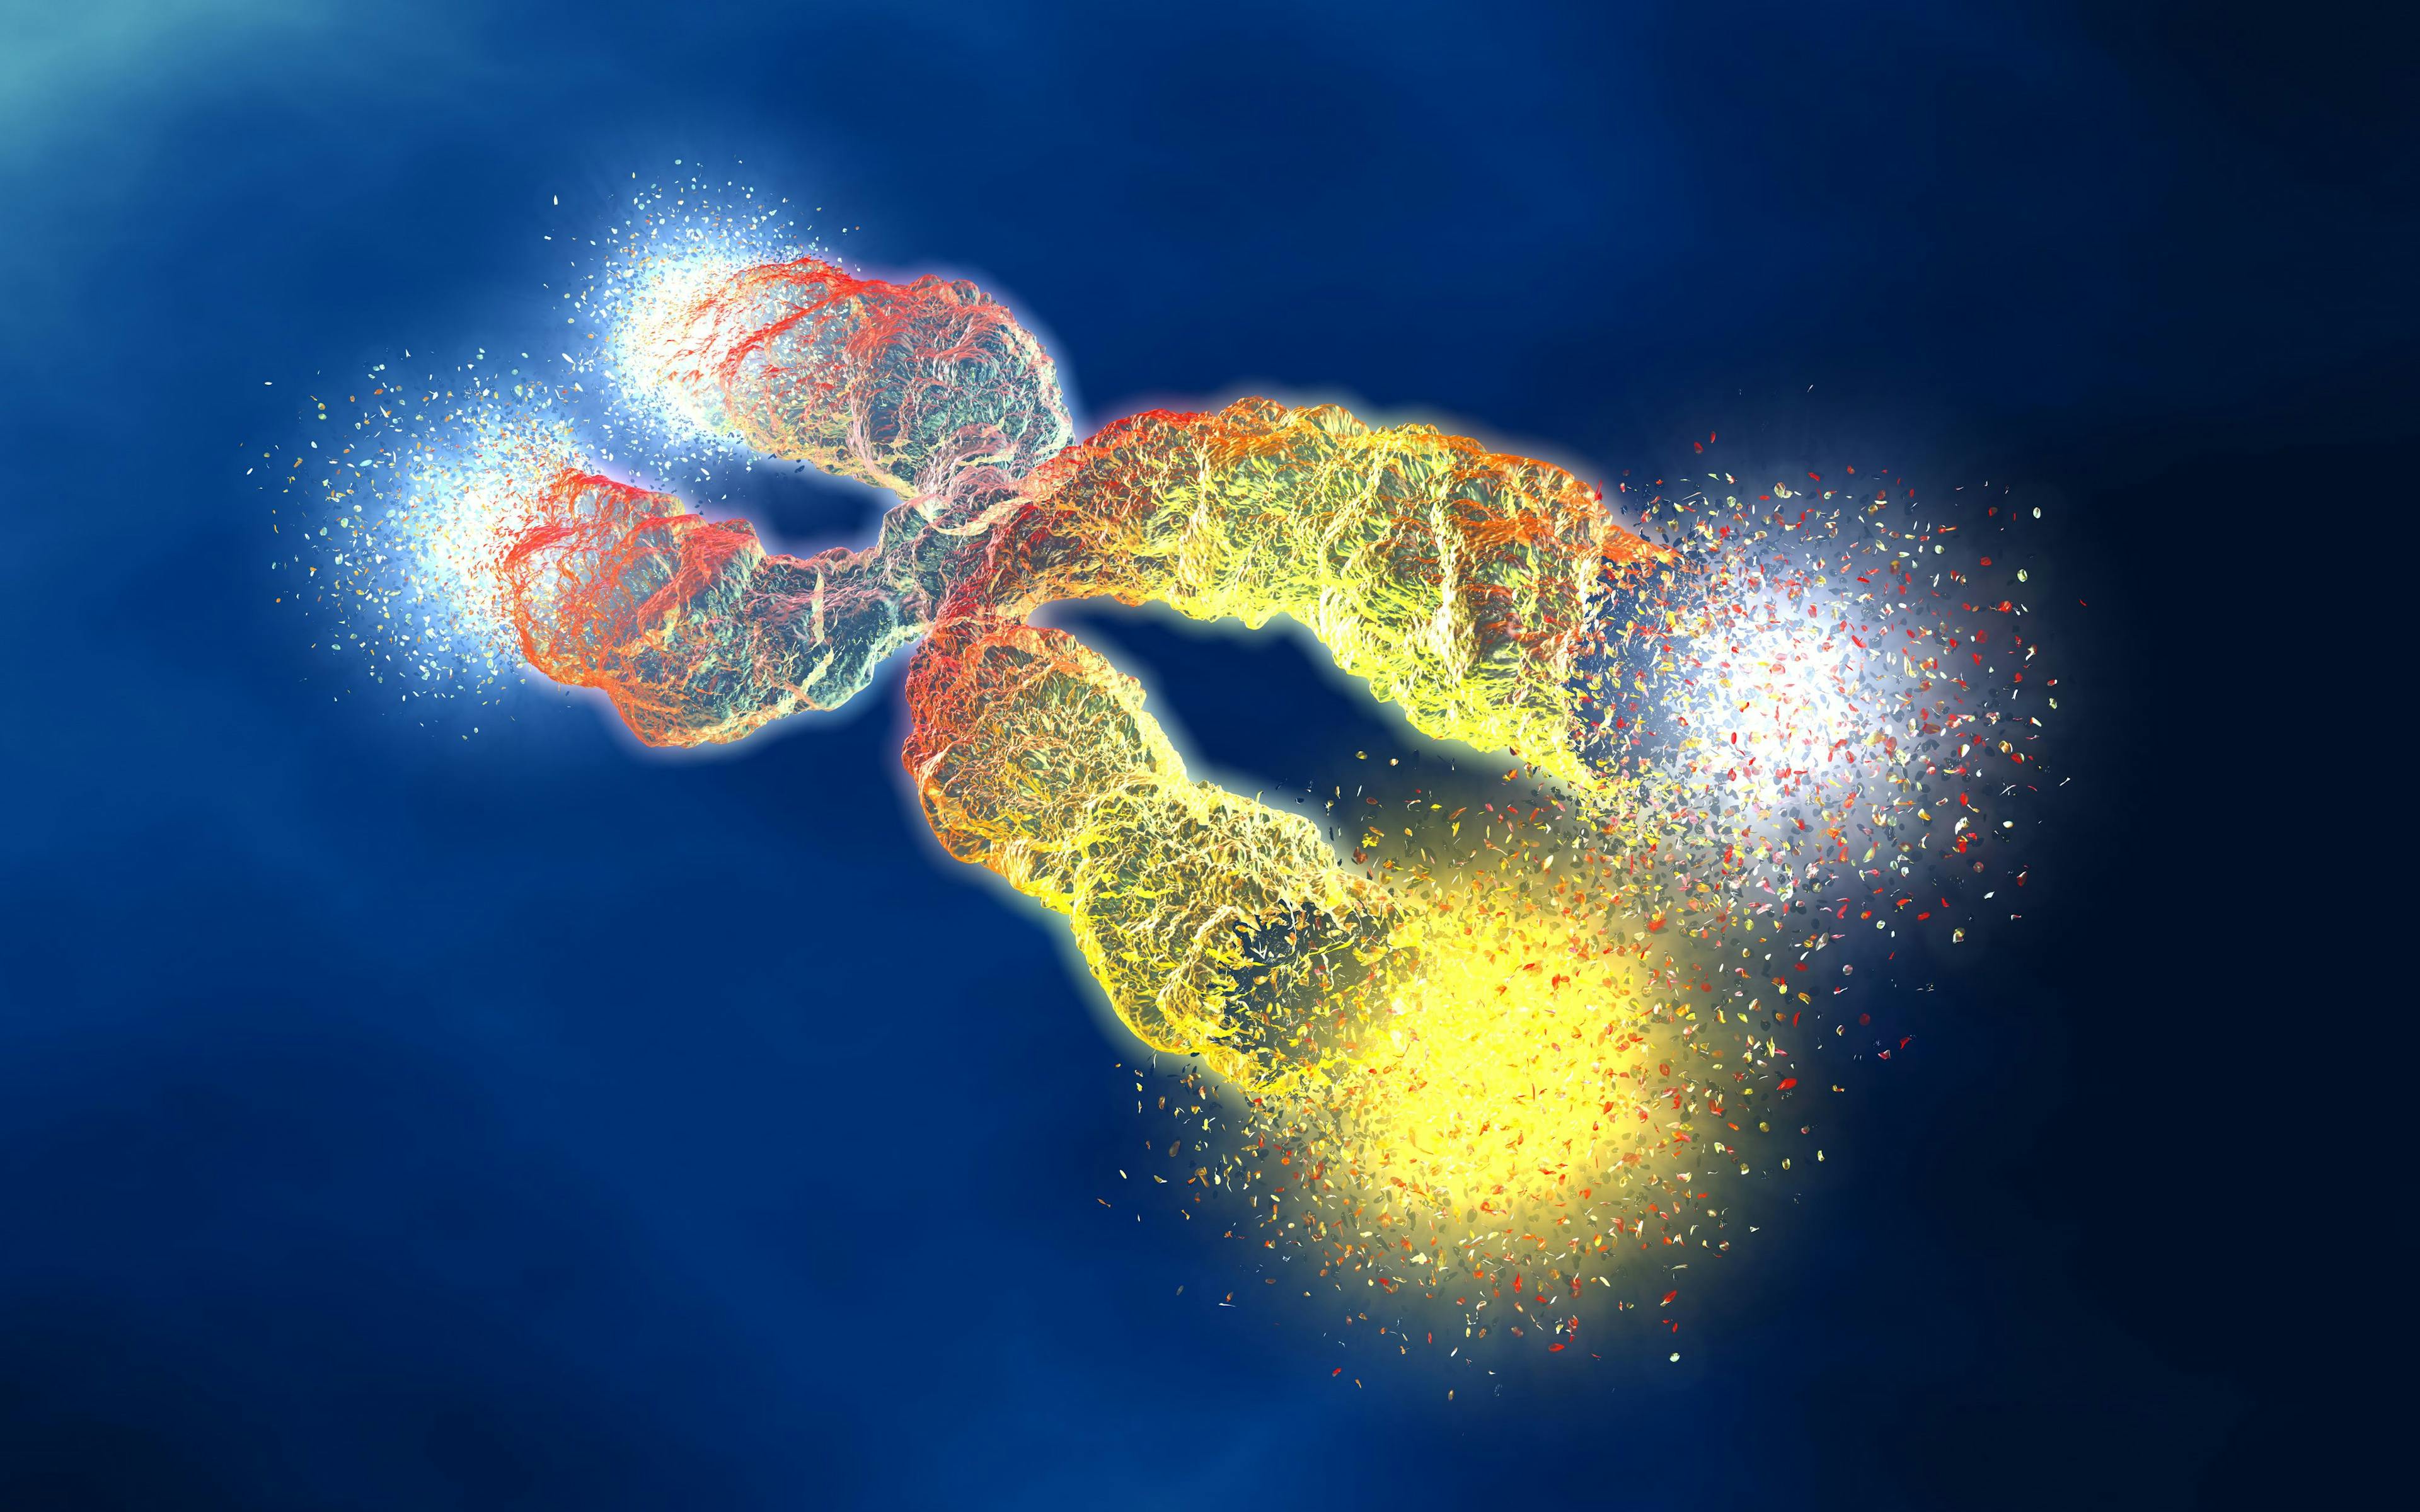 Chromosome with shortened telomeres | Image Credit: © Axel Kock - stock.adobe.com